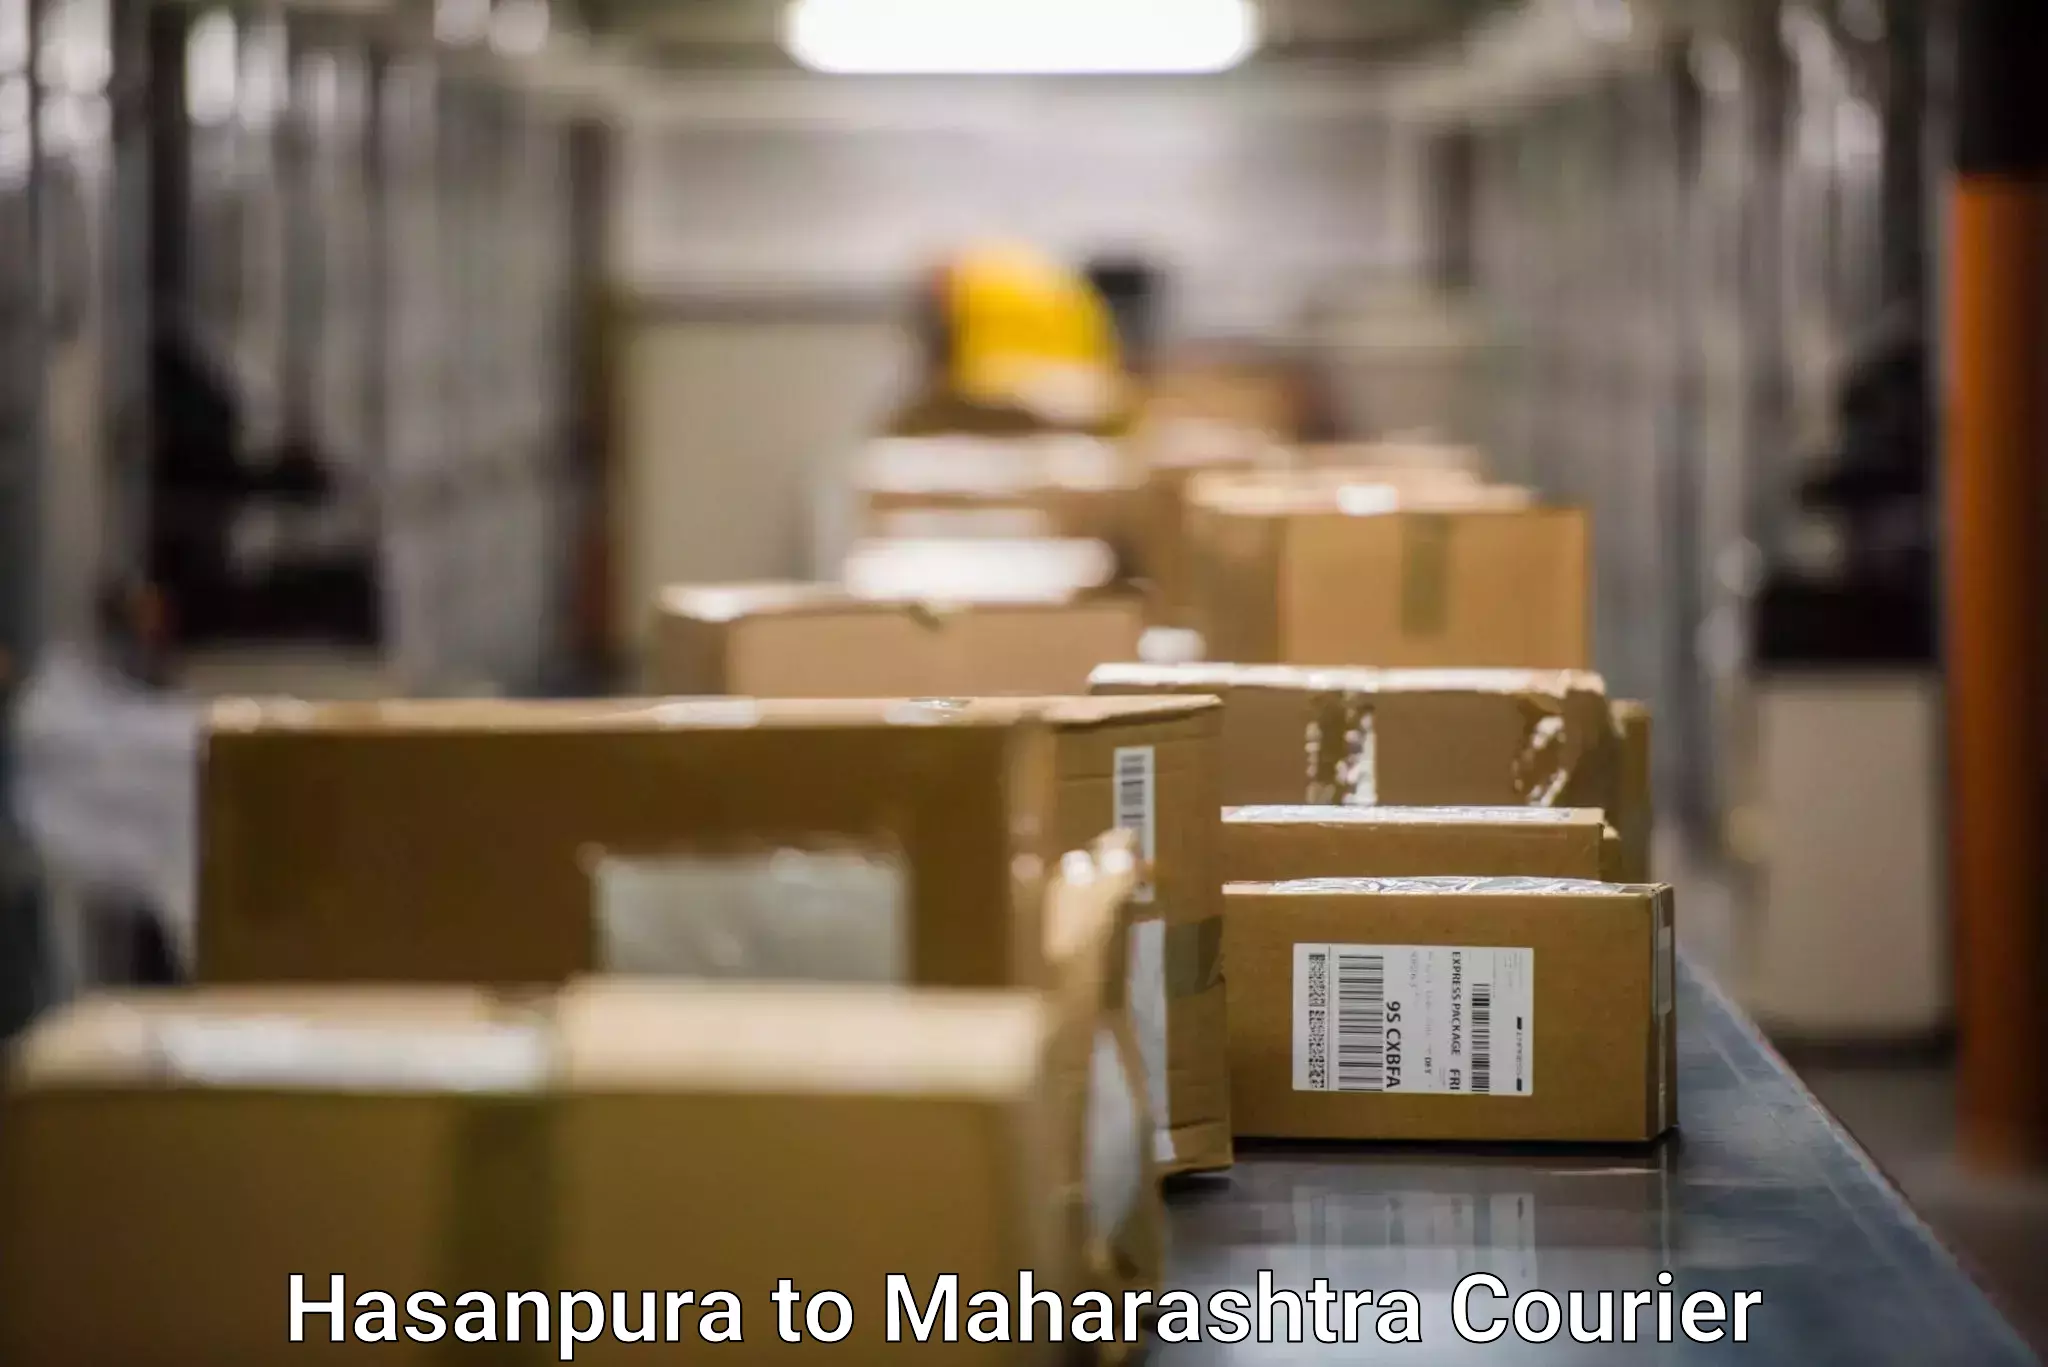 Optimized shipping routes in Hasanpura to Tata Institute of Social Sciences Mumbai